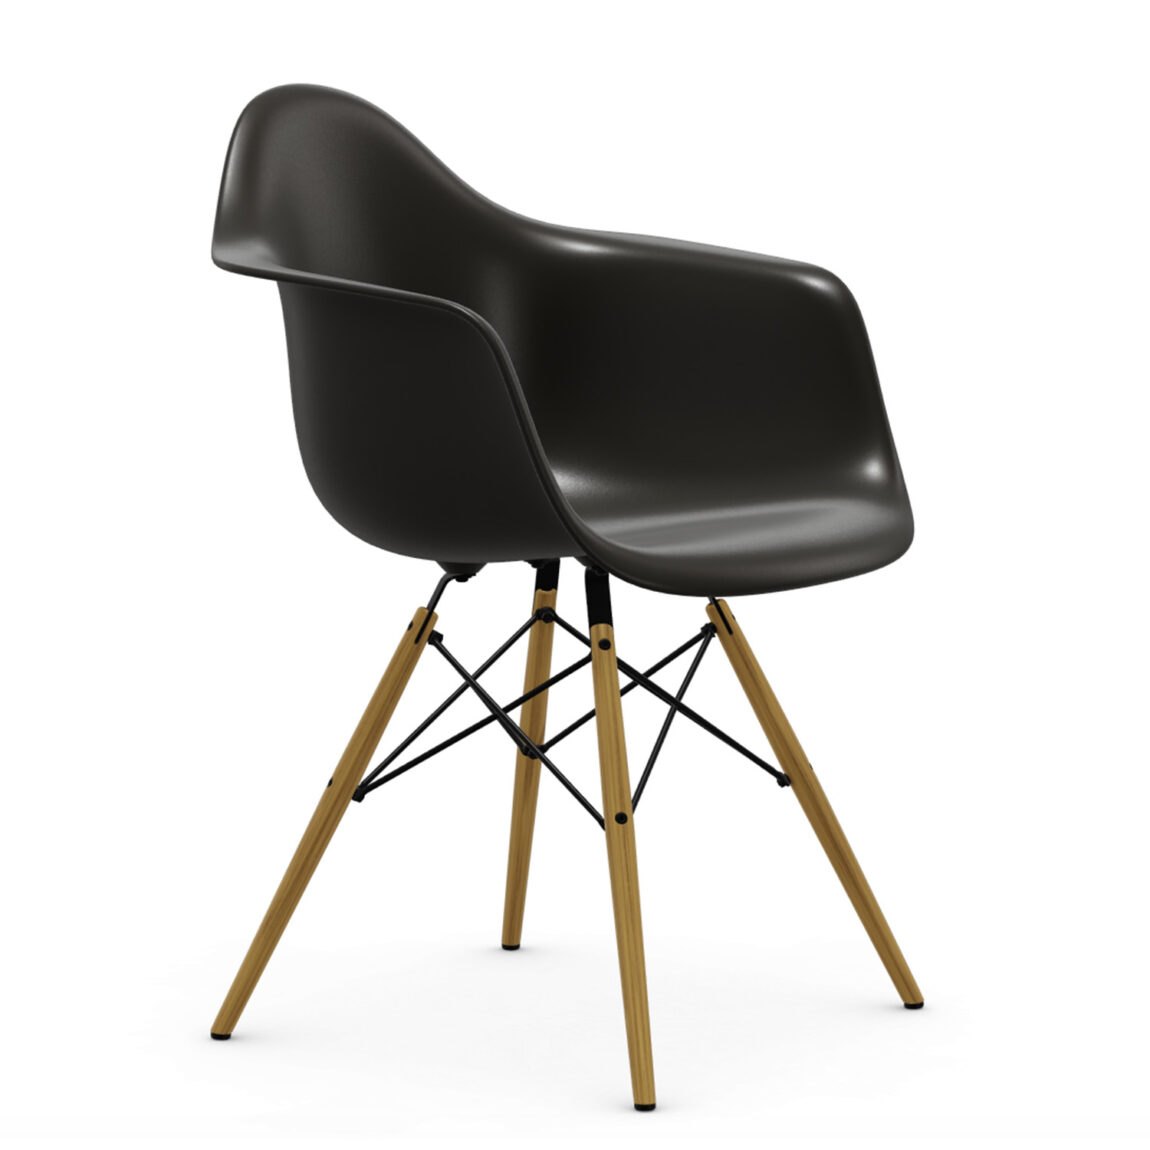 Výprodej Vitra designové židle DAW-skořepina černá